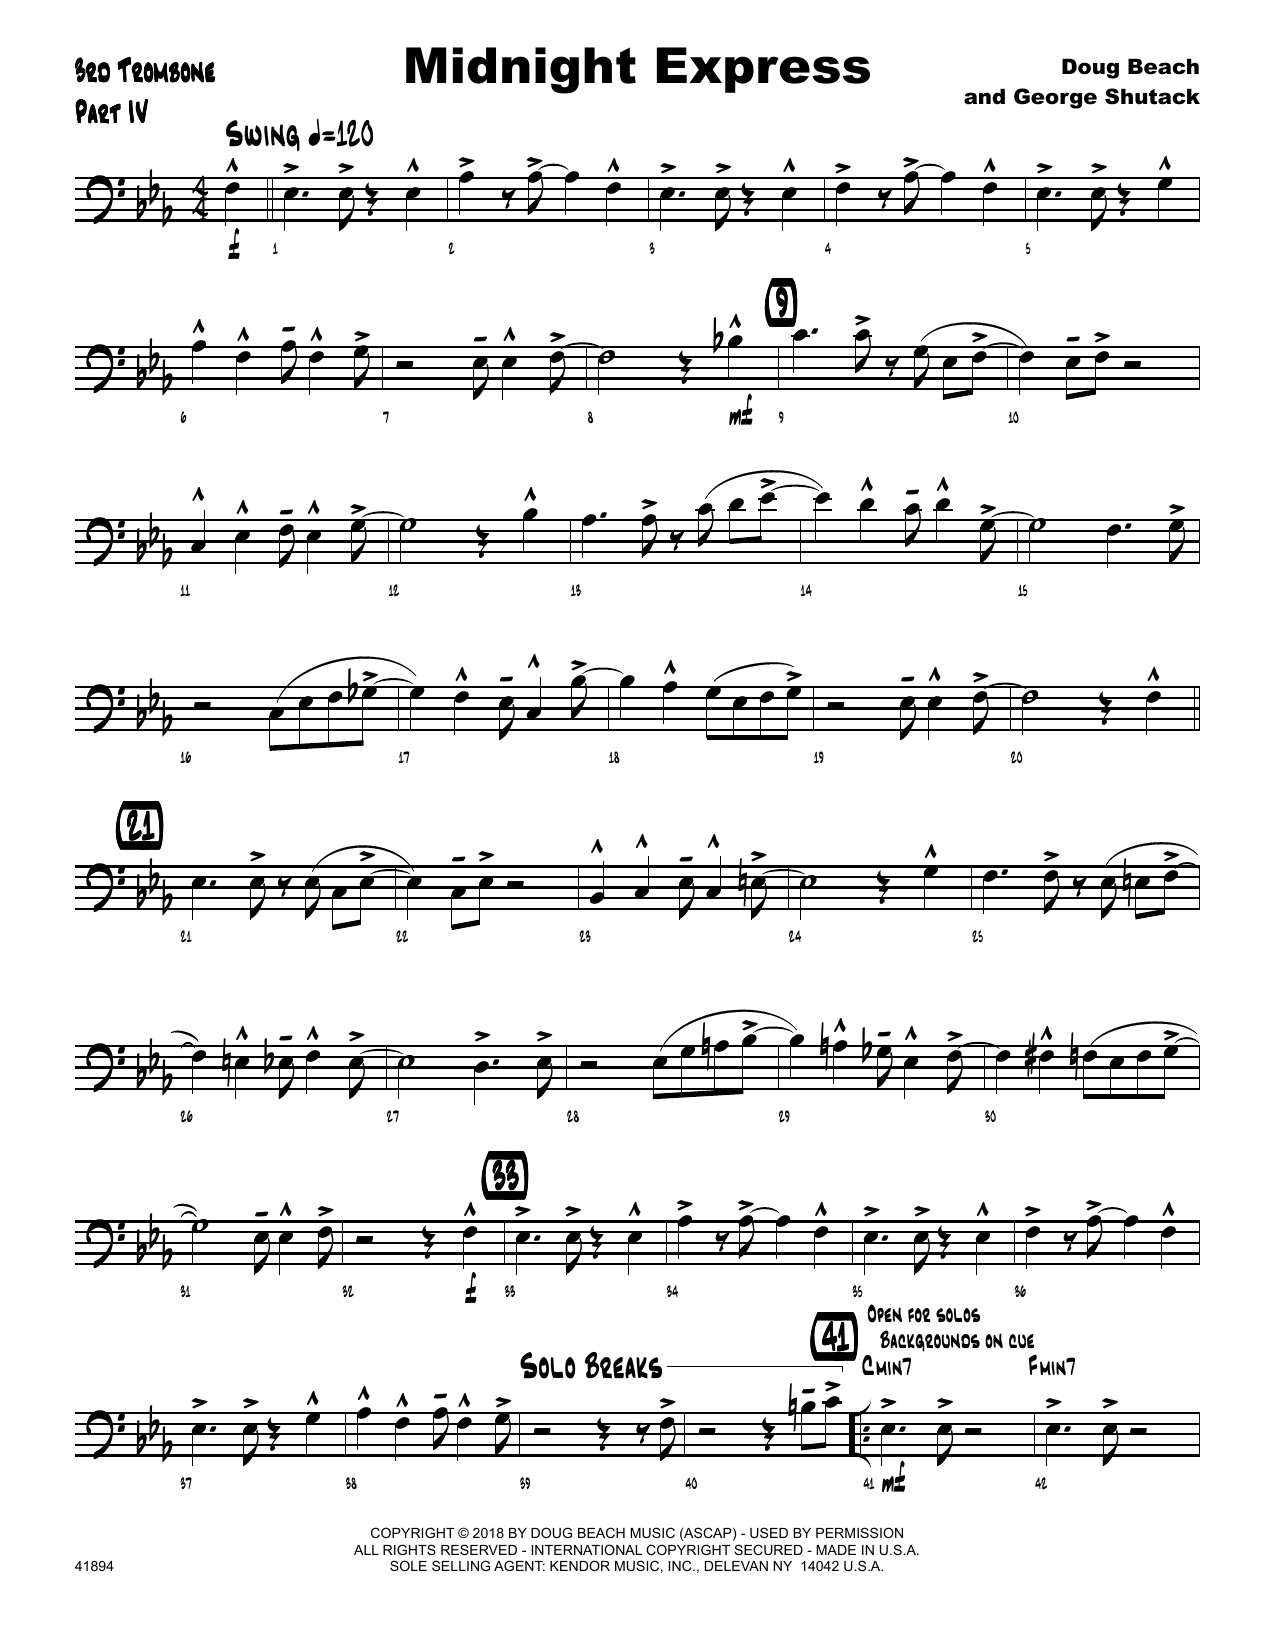 Download Doug Beach & George Shutack Midnight Express - 3rd Trombone Sheet Music